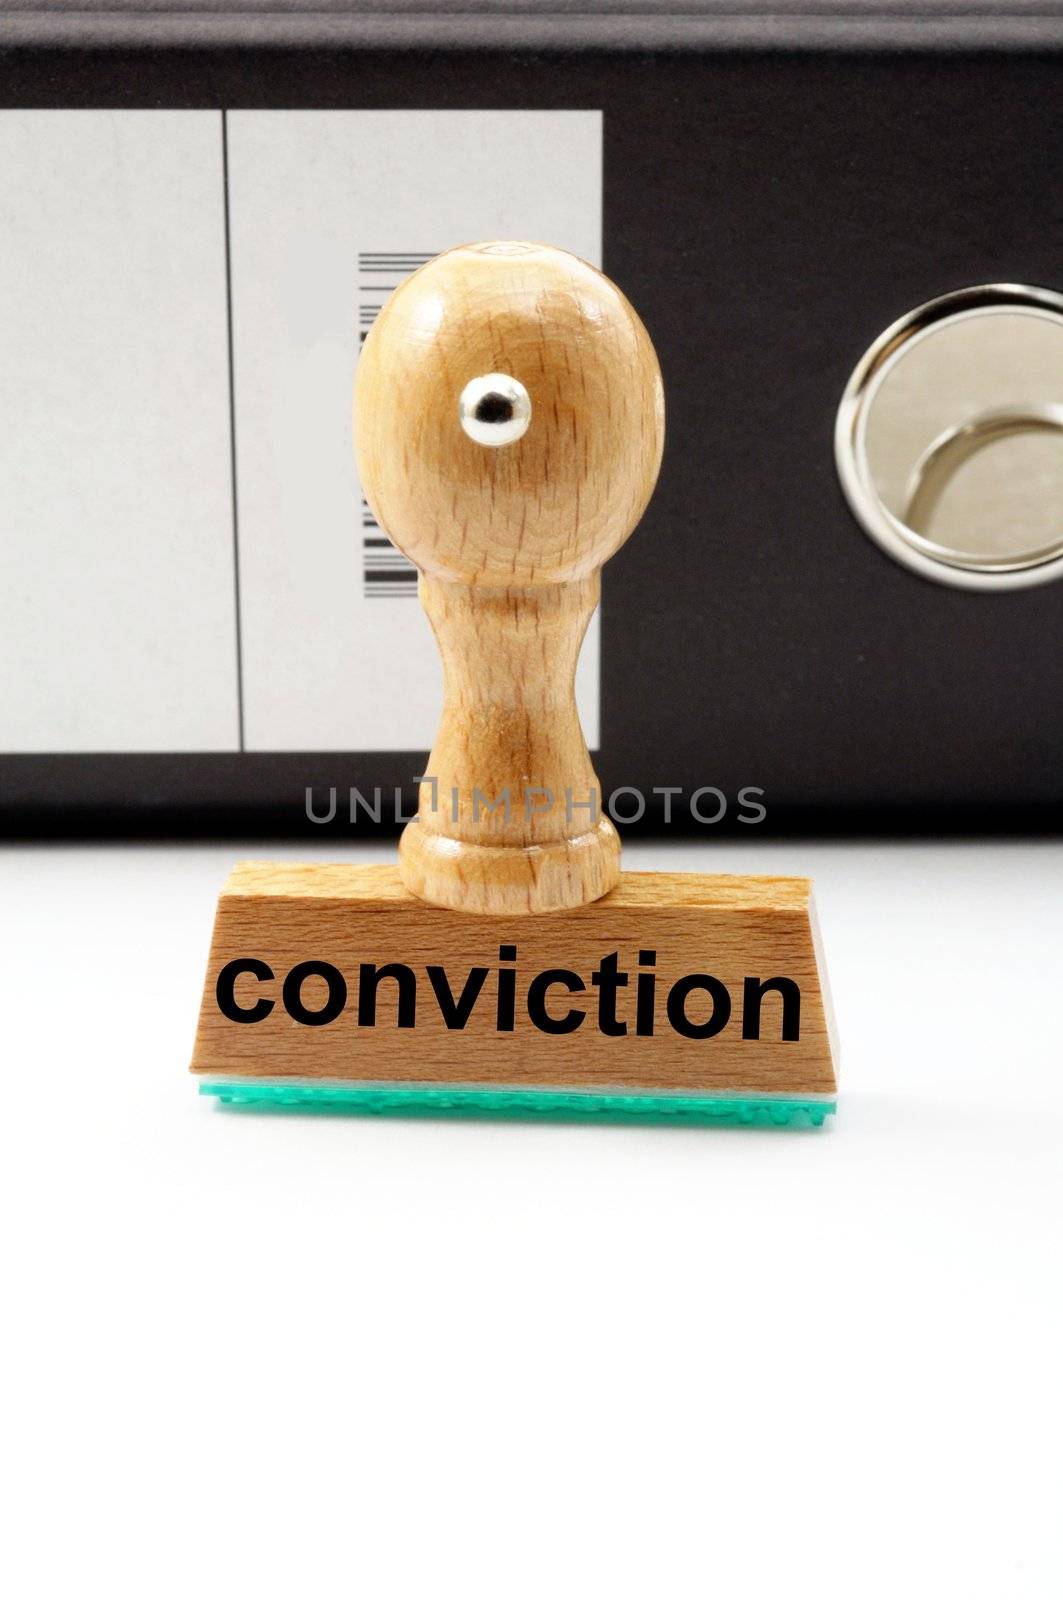 conviction by gunnar3000